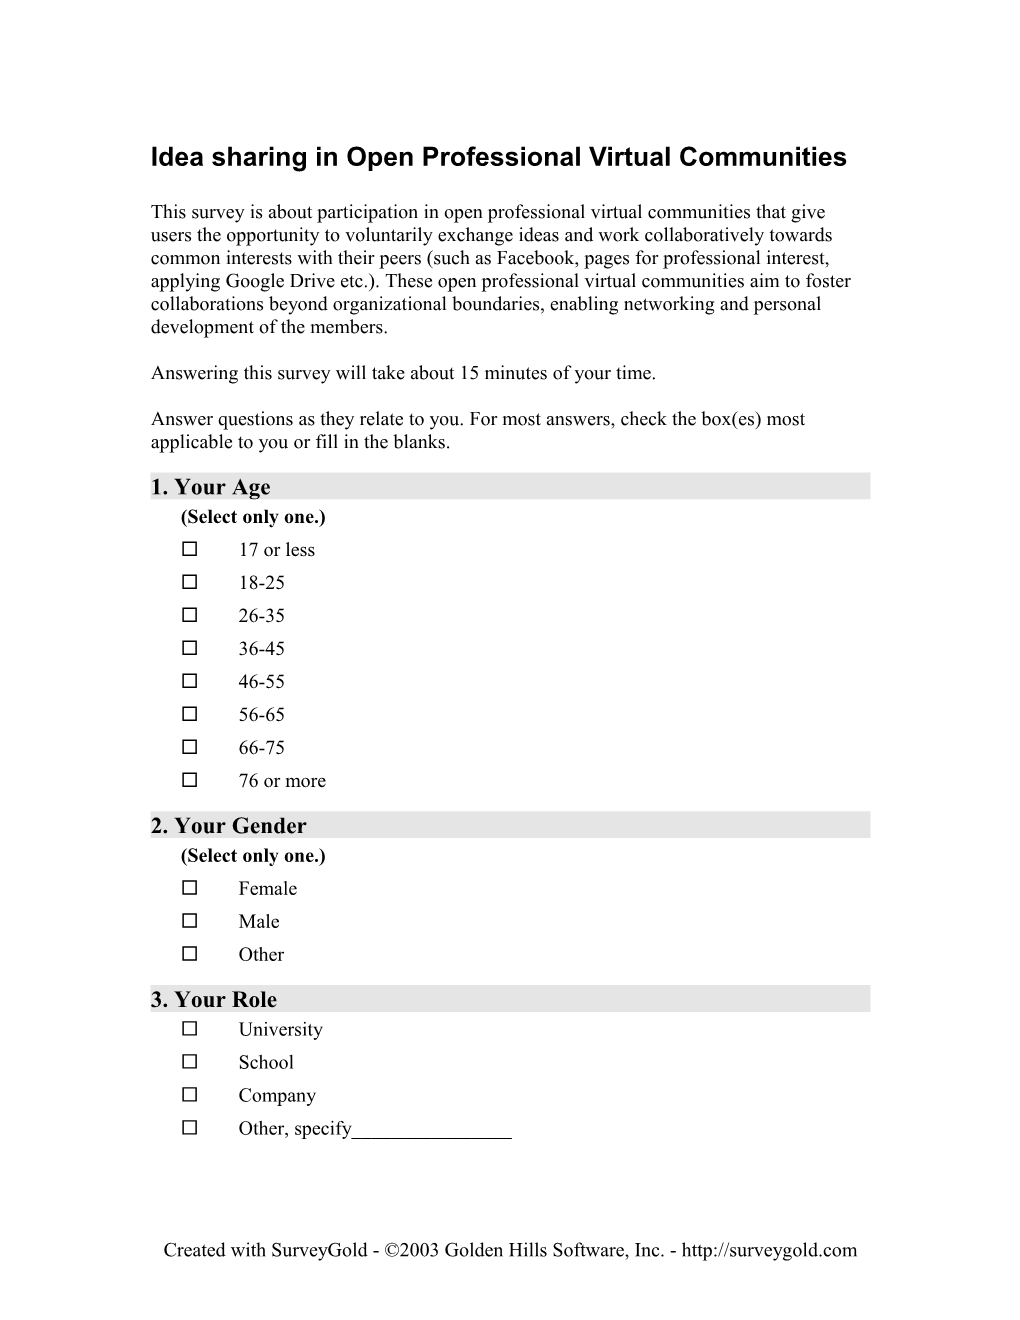 Idea Sharing in Open Professional Virtual Communities